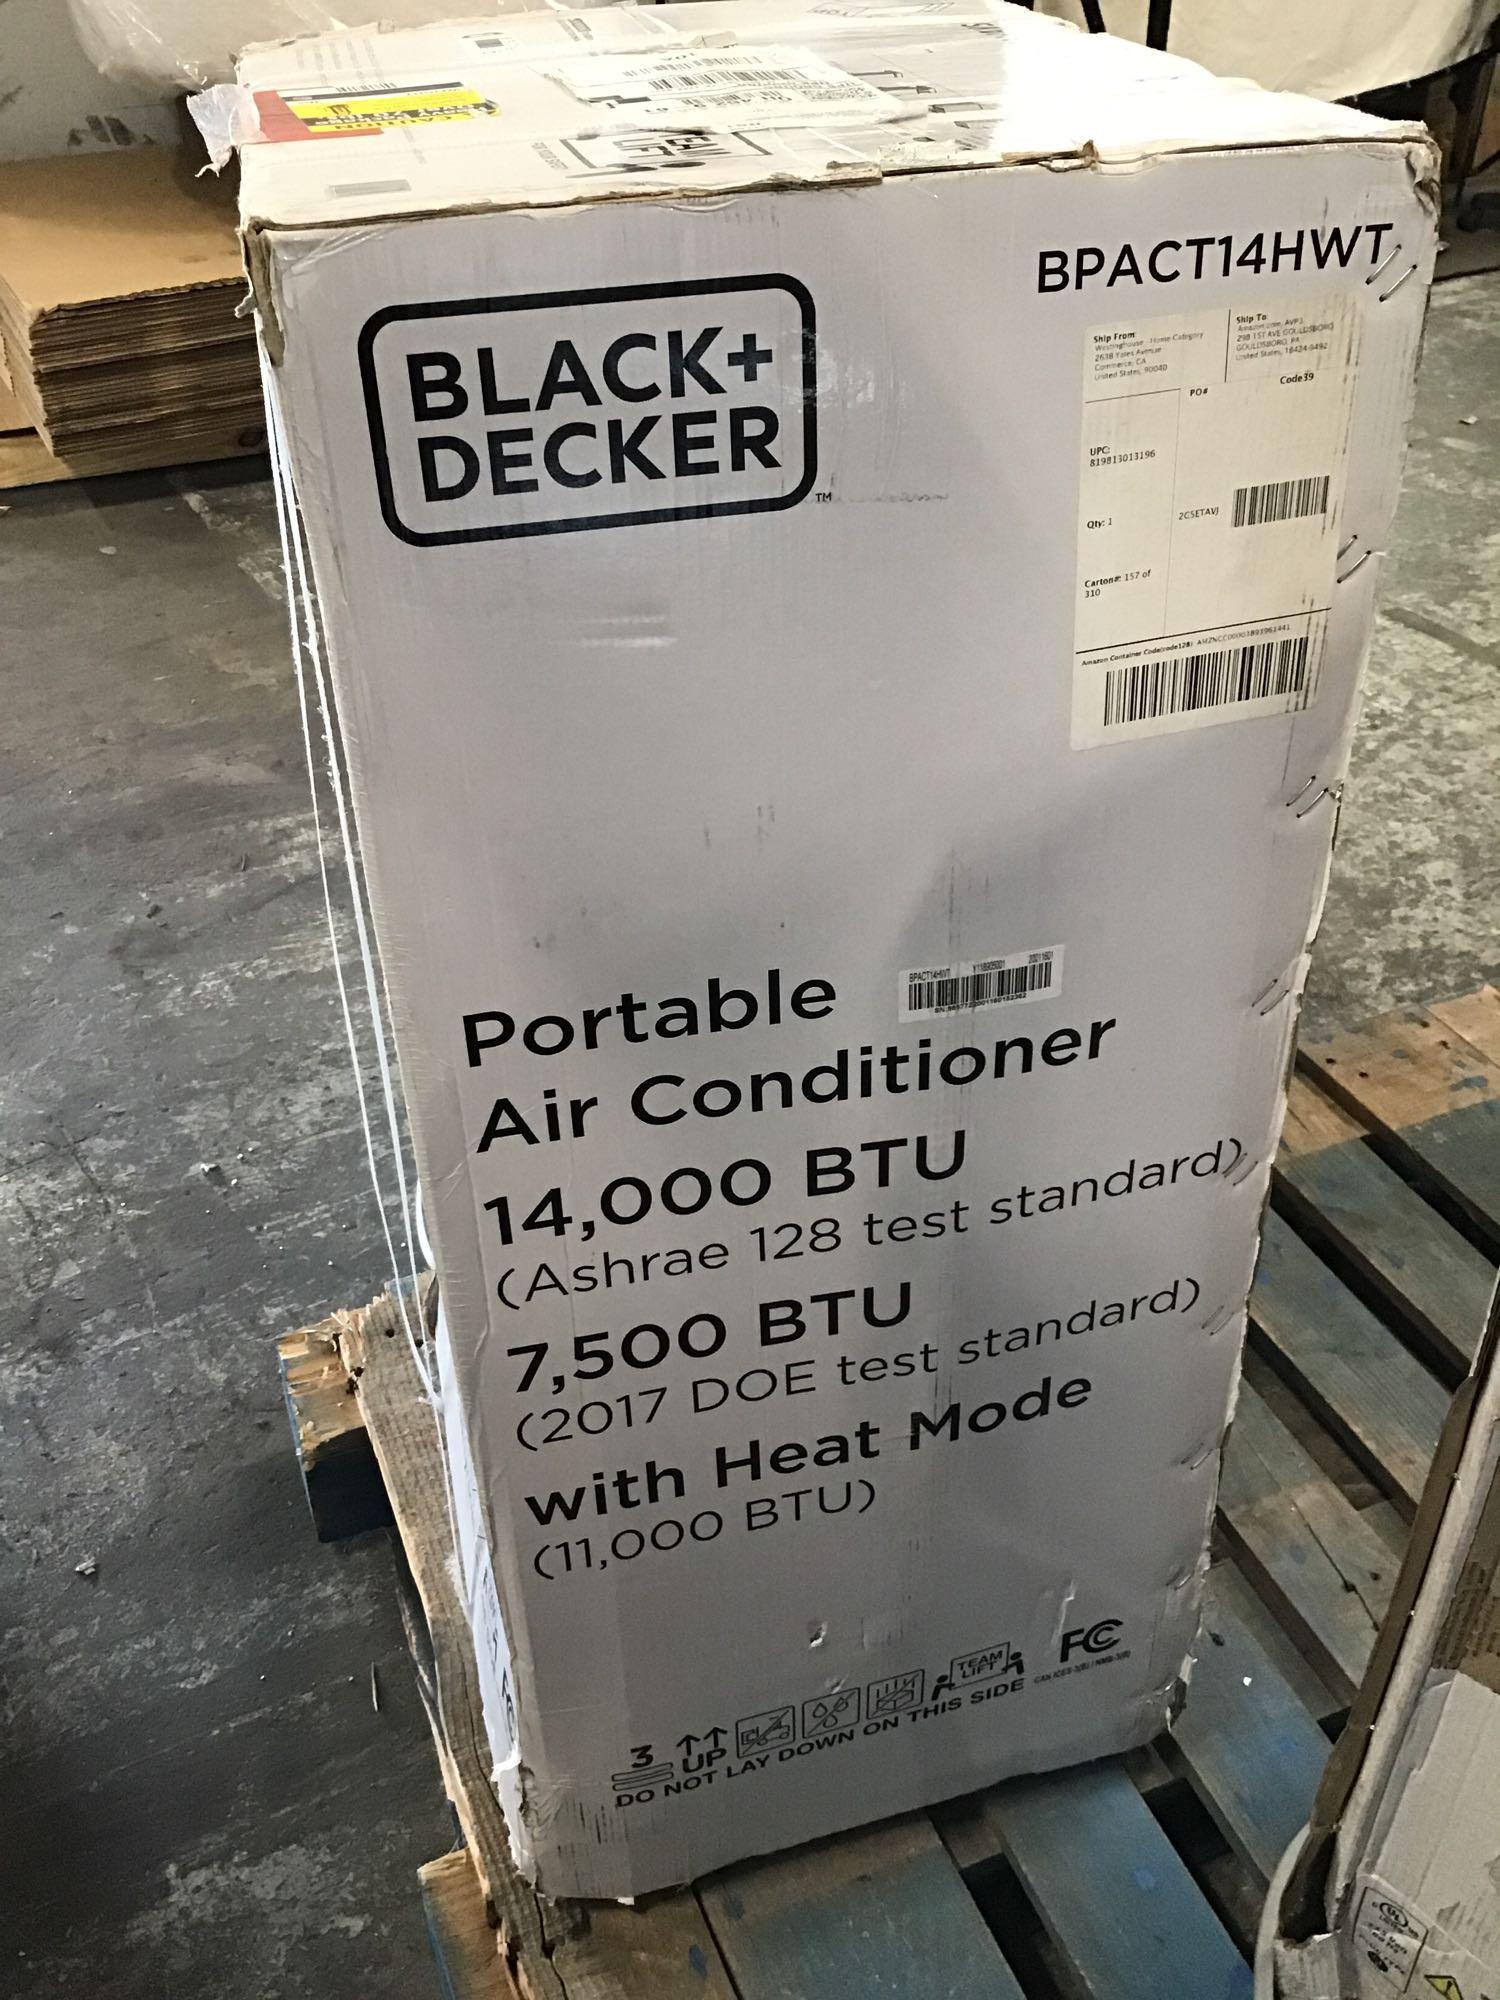 BLACK+DECKER BPACT14HWT Portable Air Conditioner